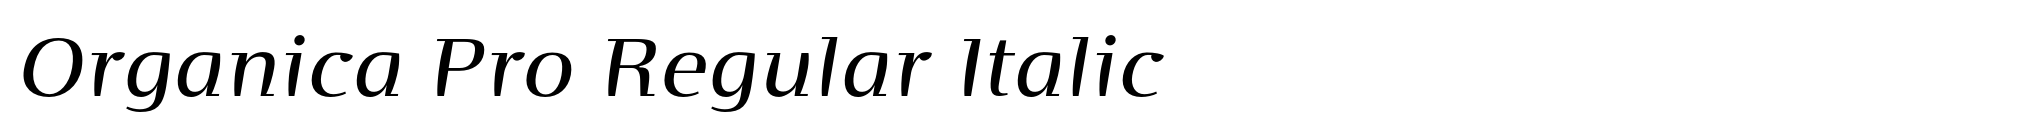 Organica Pro Regular Italic image